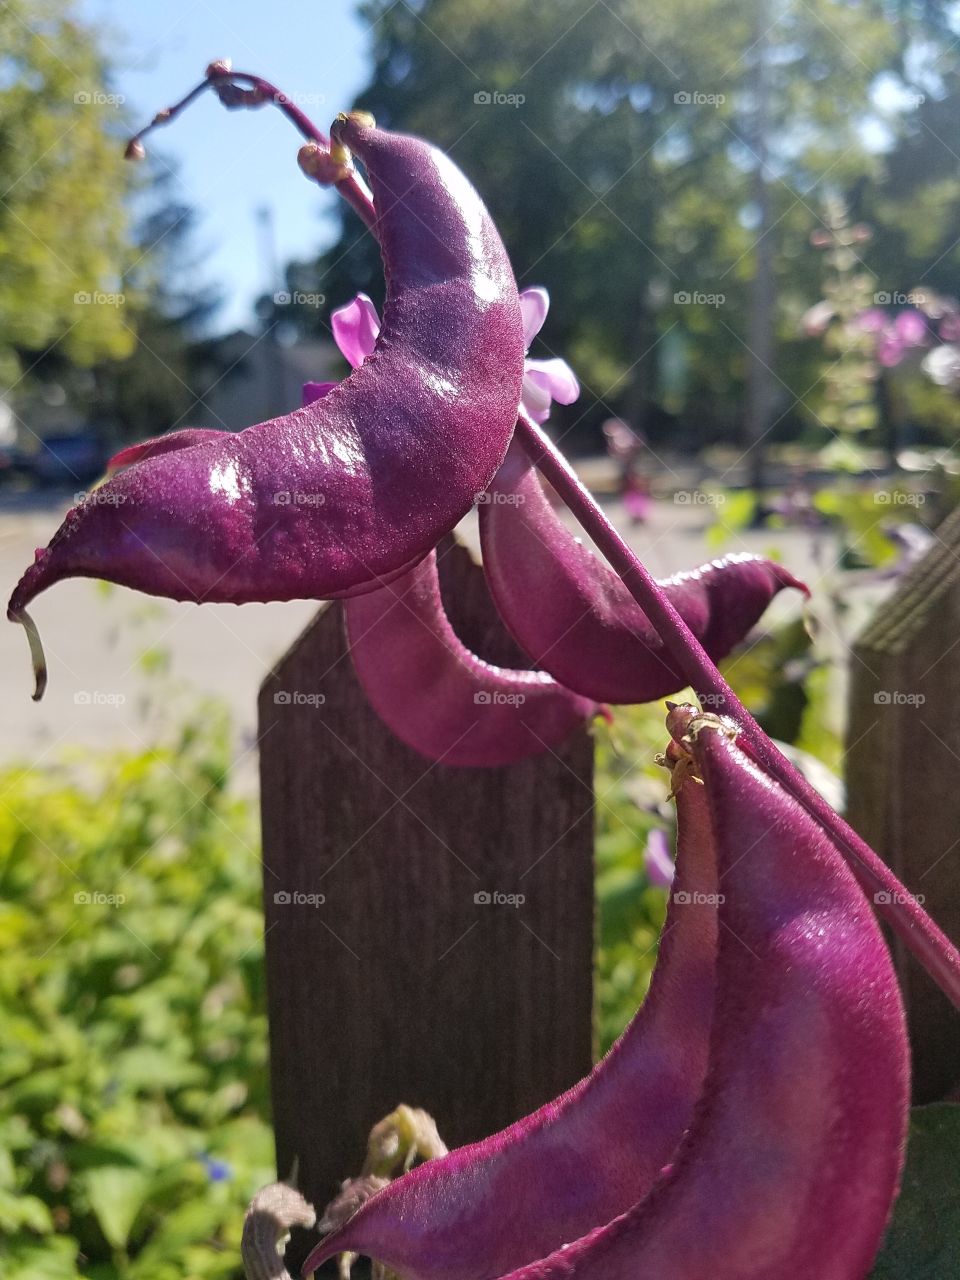 purple beans!